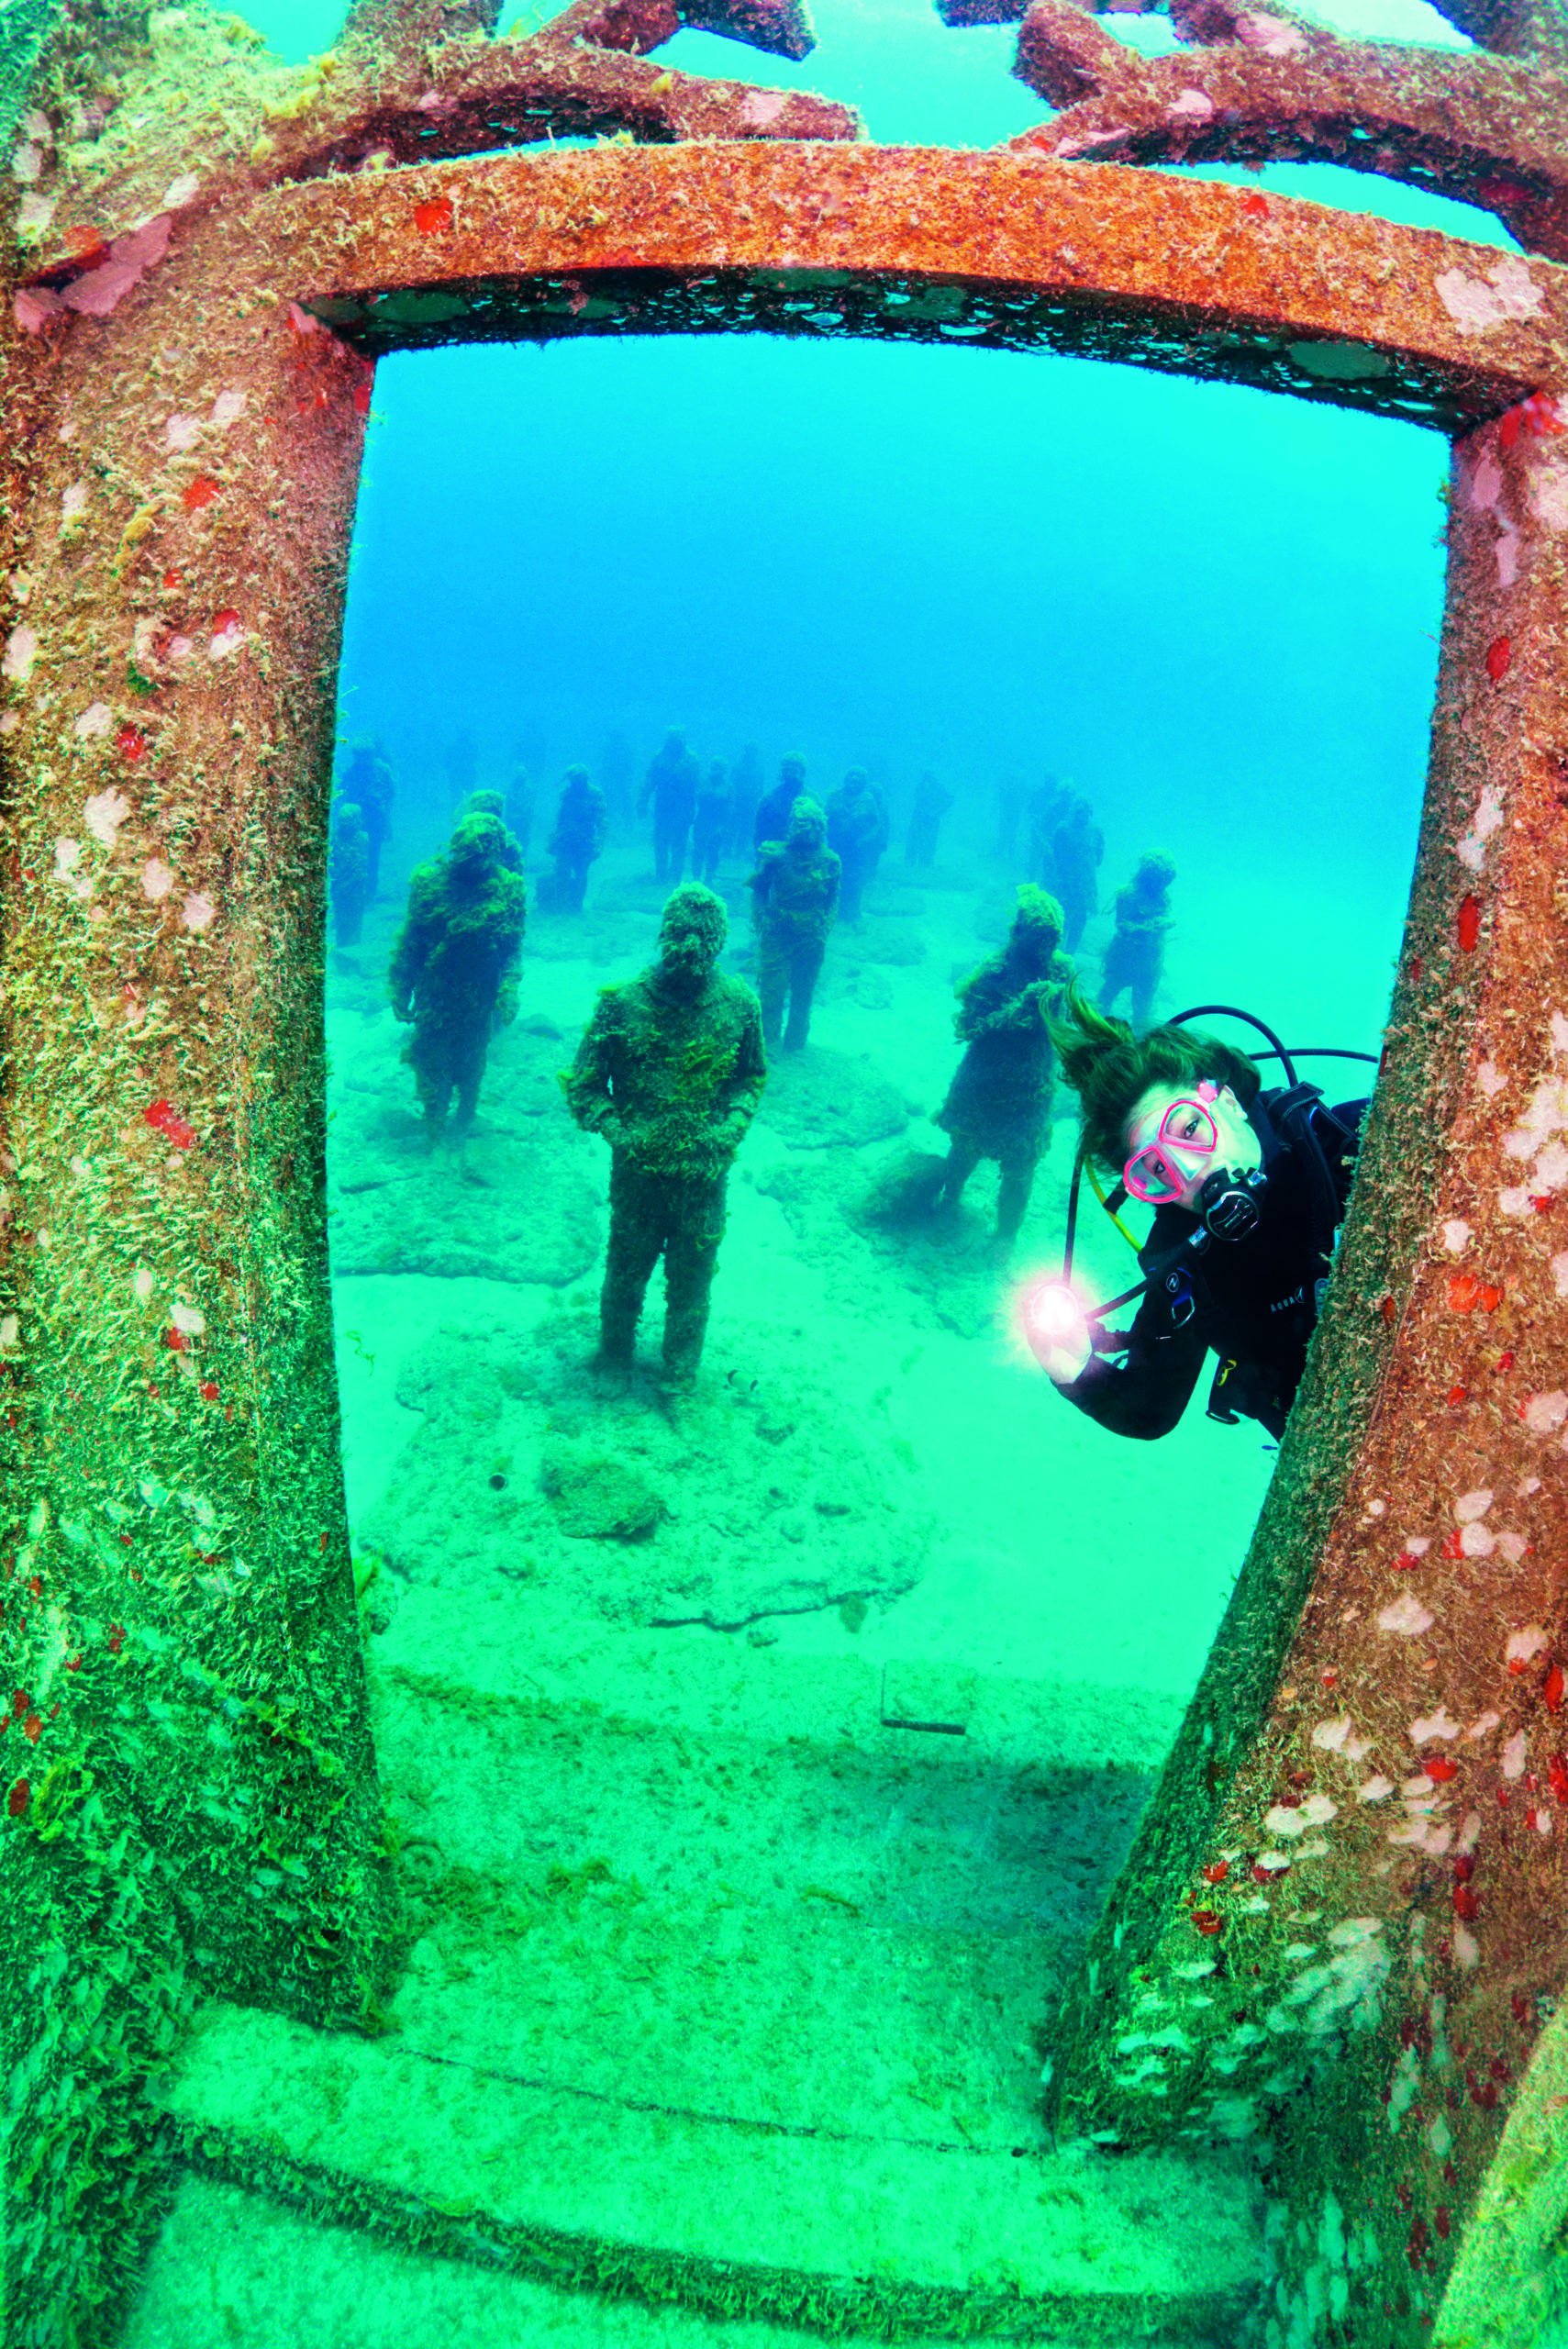 Museo Atlantico underwater sculpture park, 